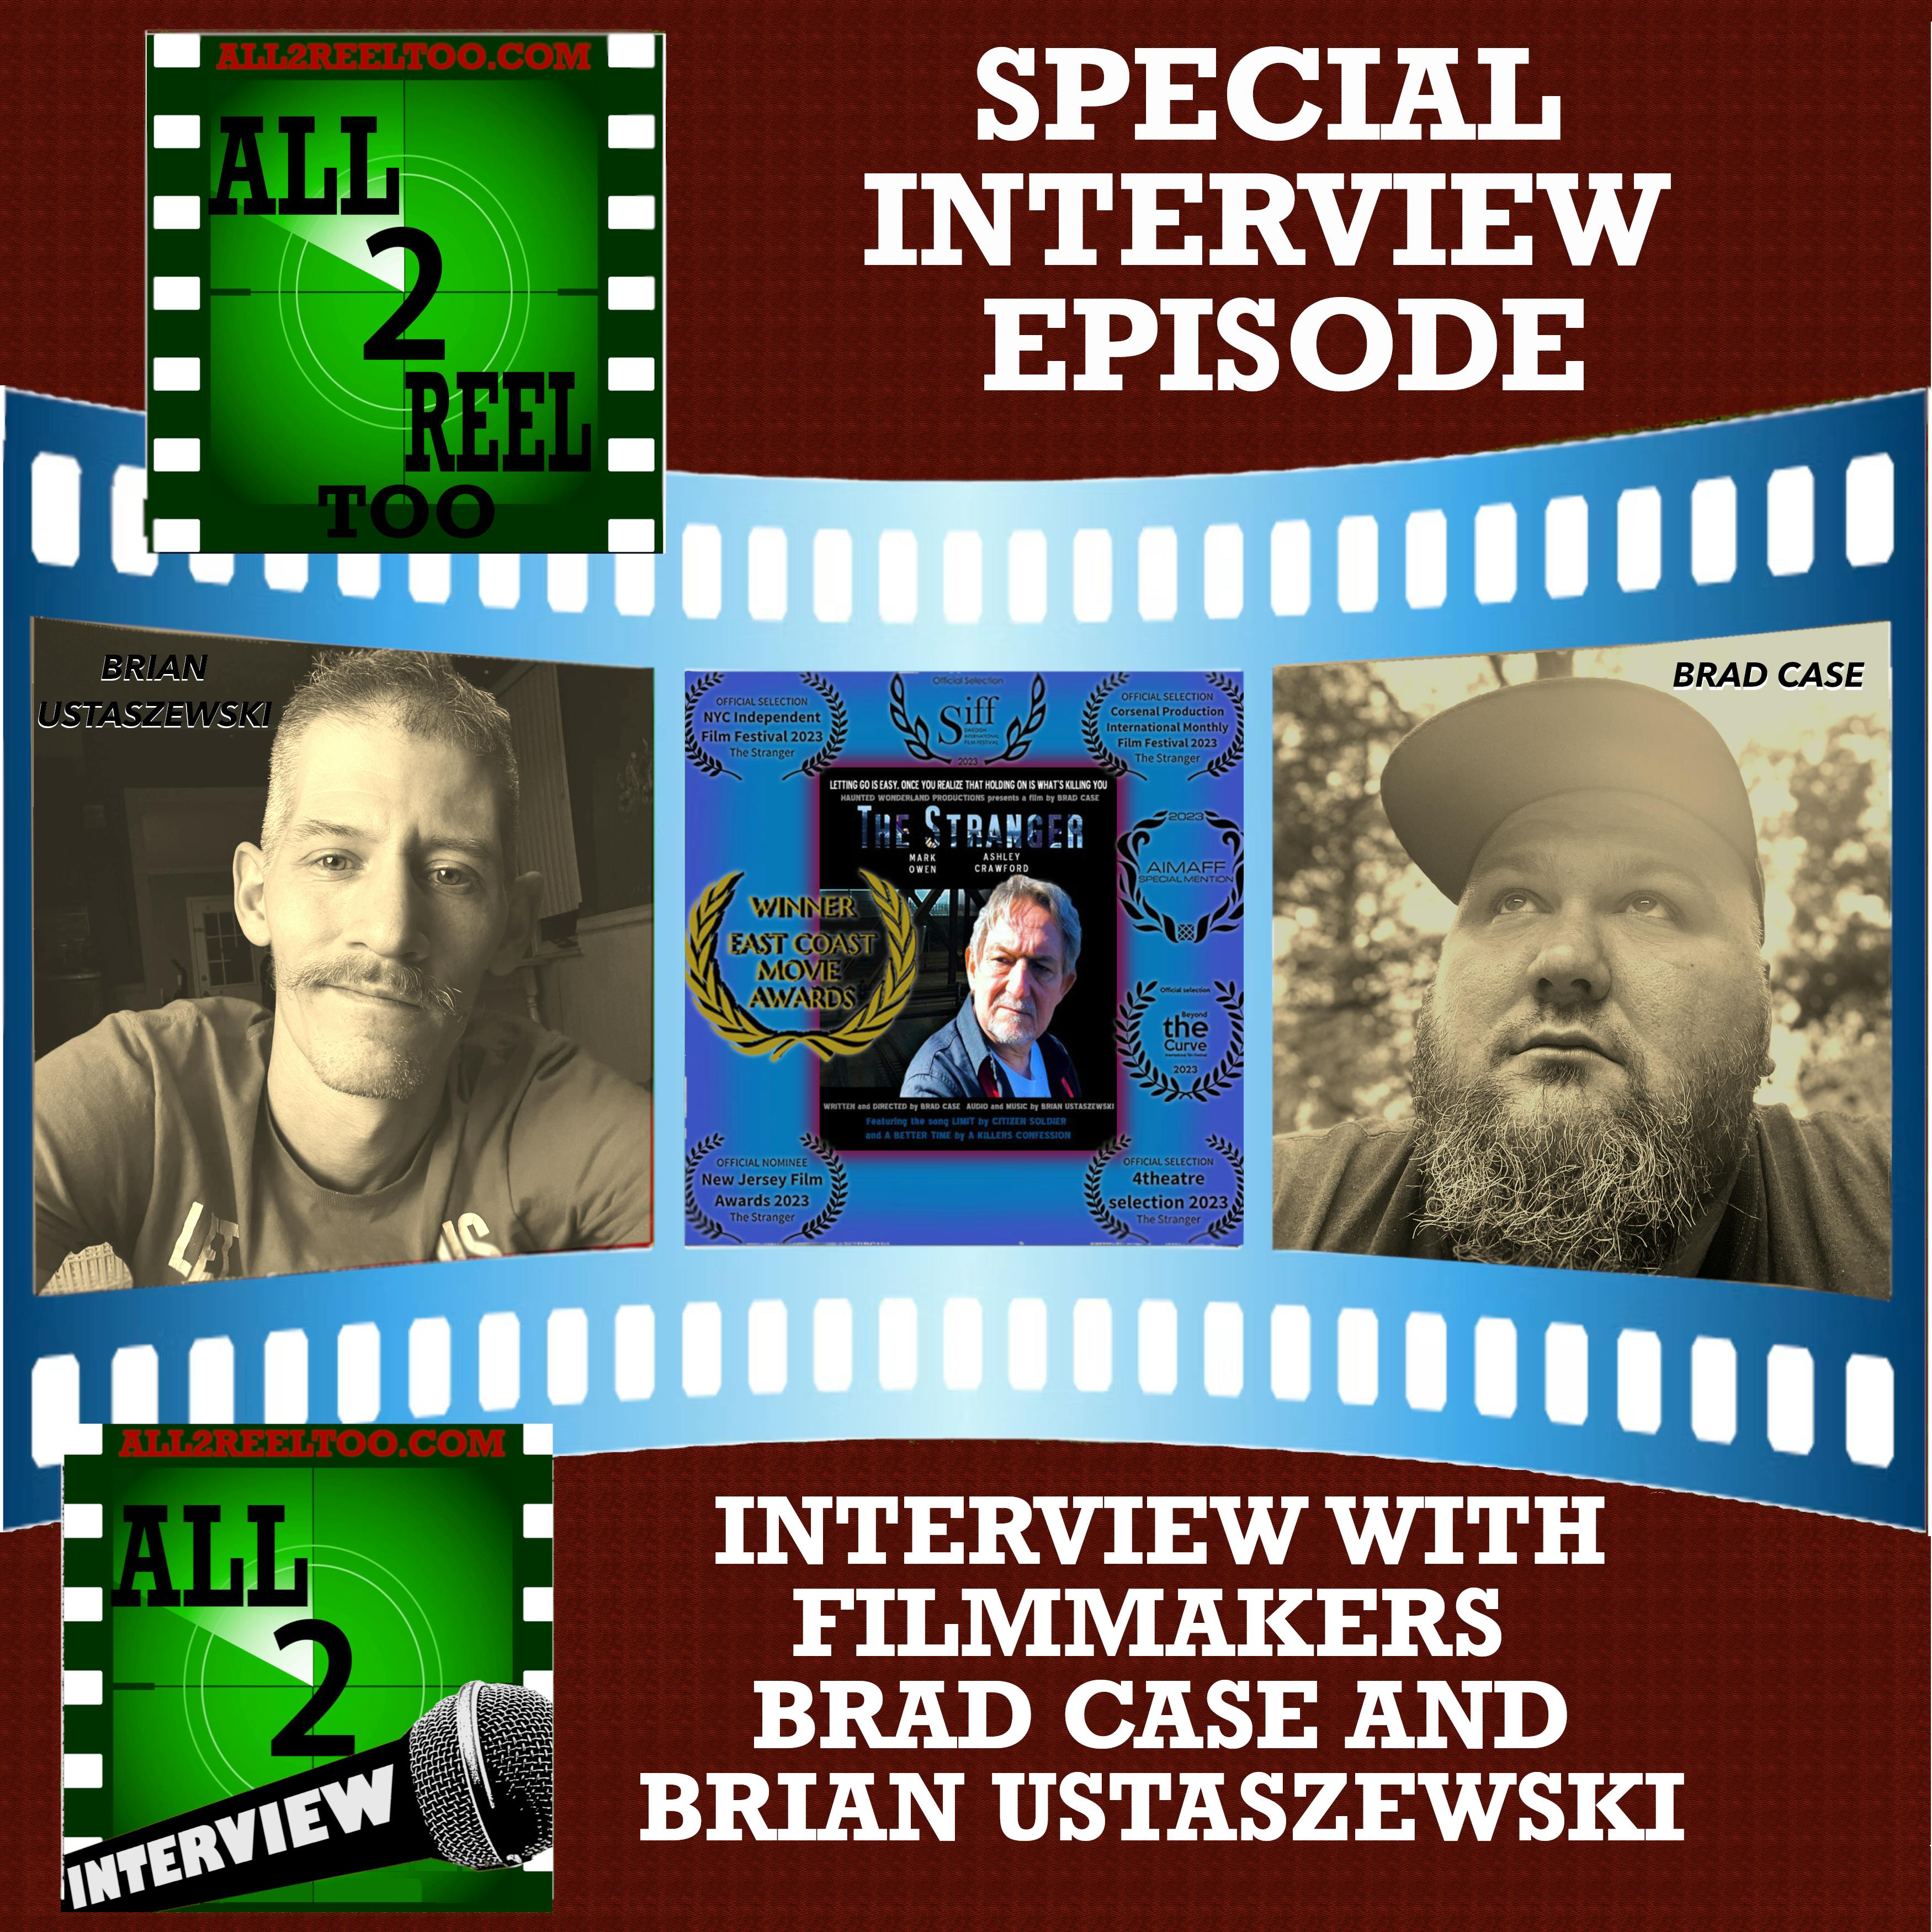 BRAD CASE AND BRIAN USTASZEWSKI INTERVIEW